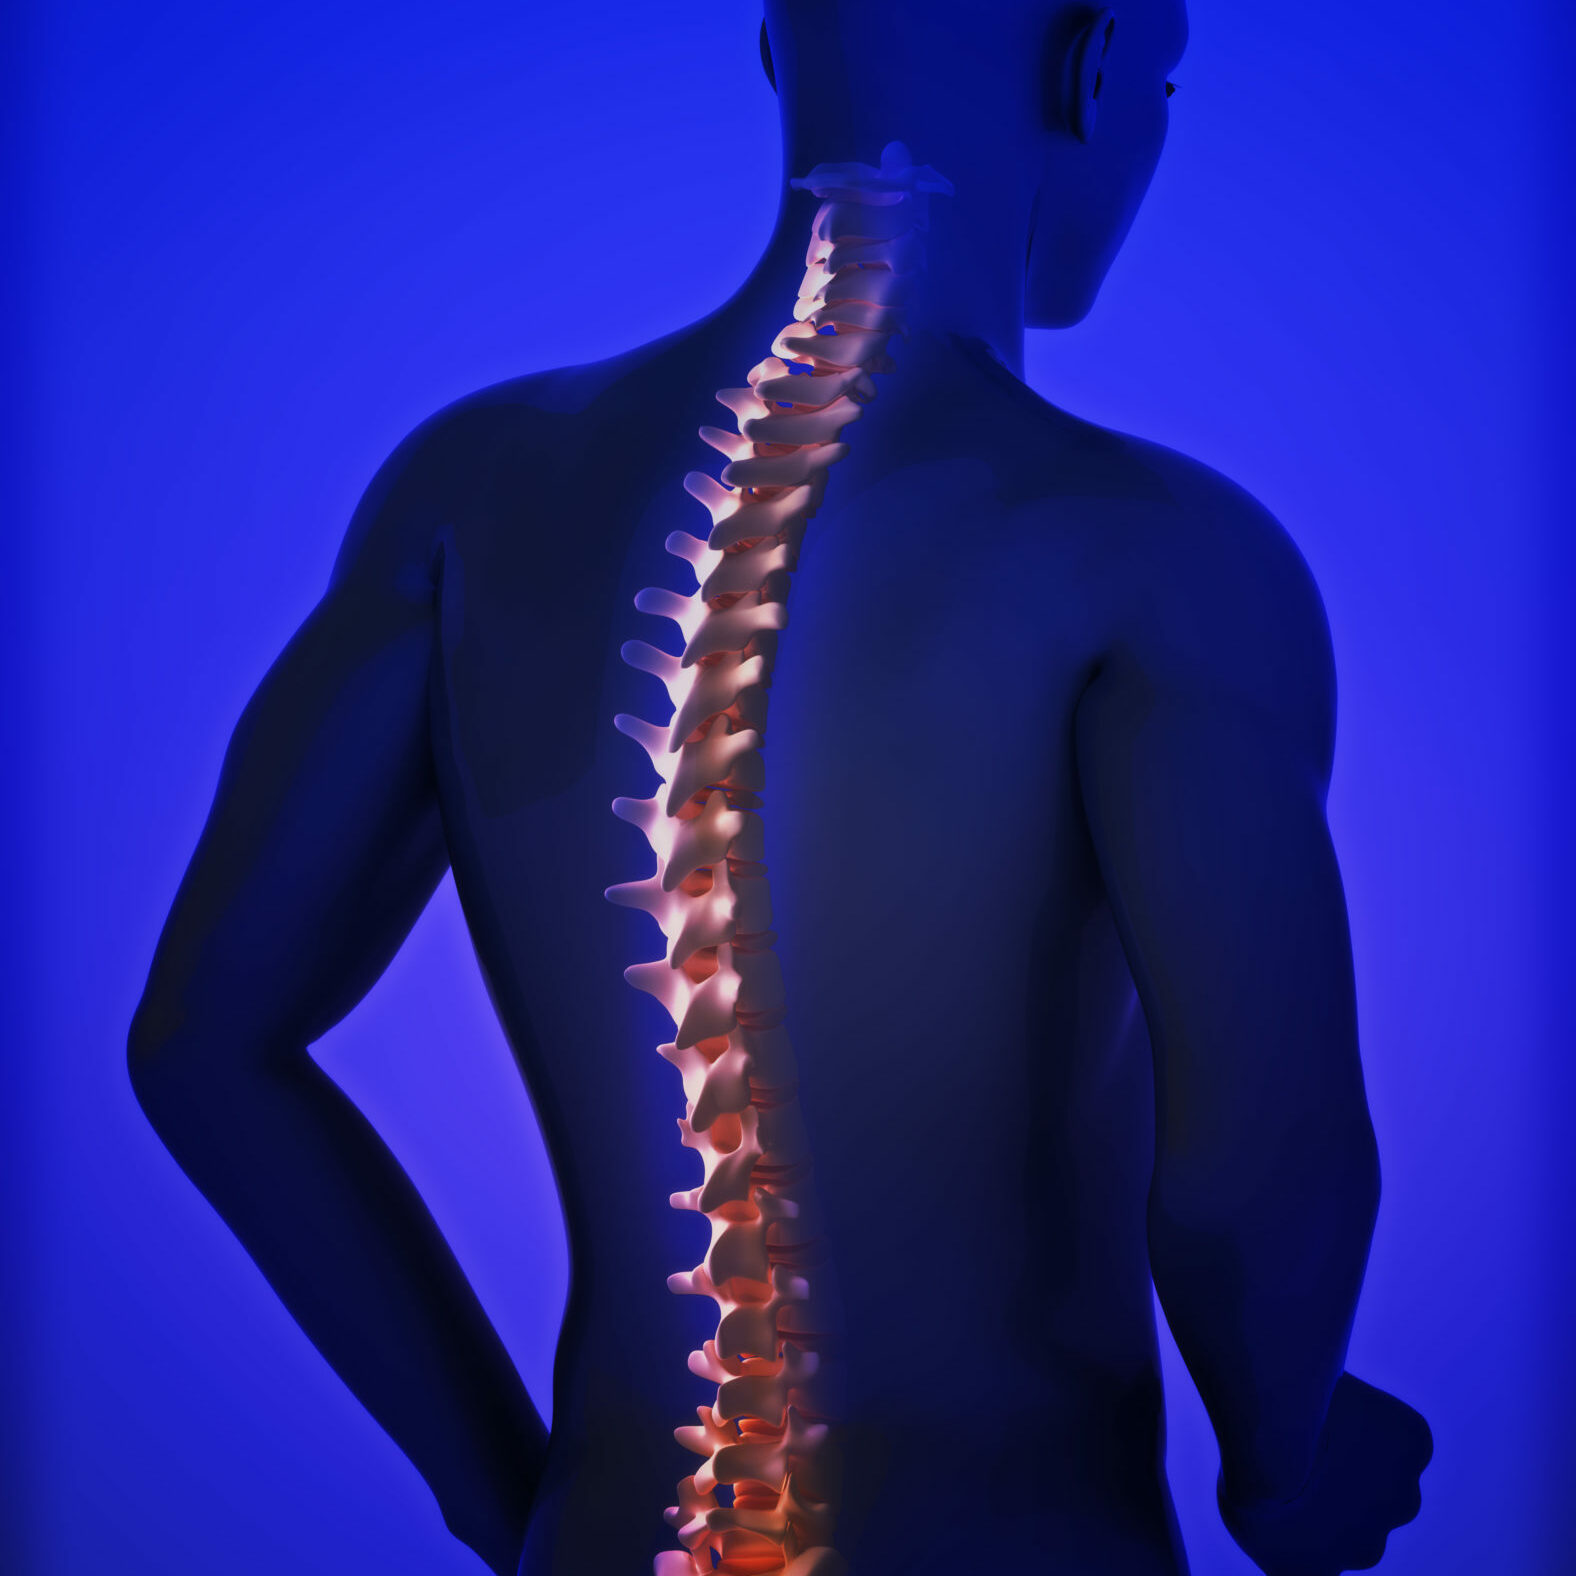 human-spine-PMHCG87